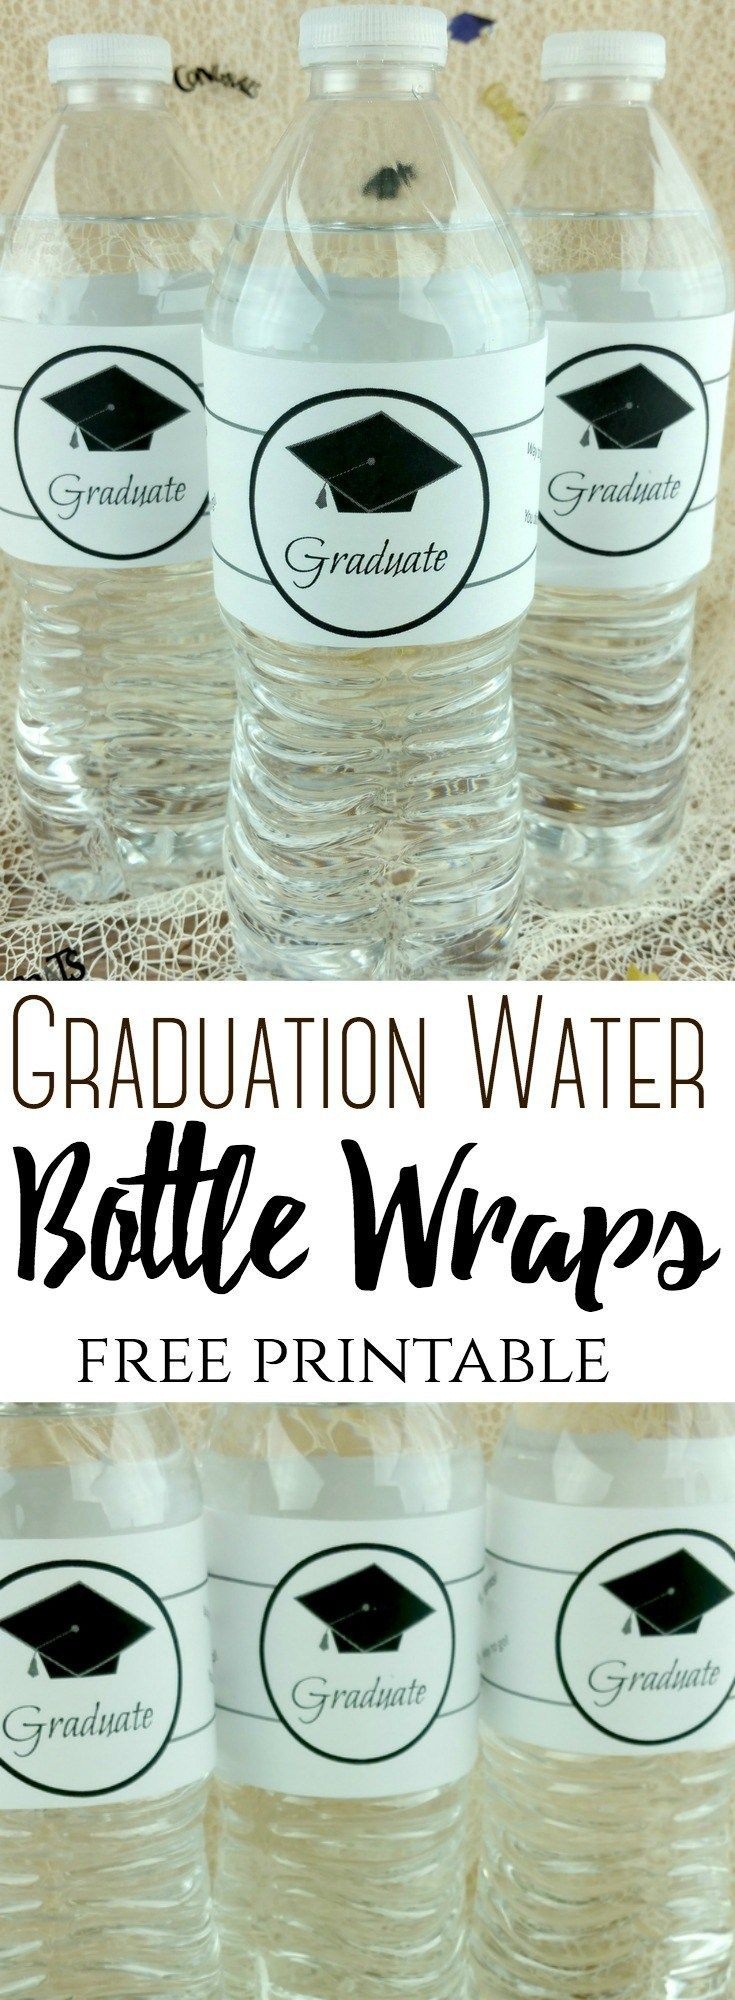 Graduation Water Bottle Wraps (Free Printable Label) #graduation - Free Printable Water Bottle Labels Graduation